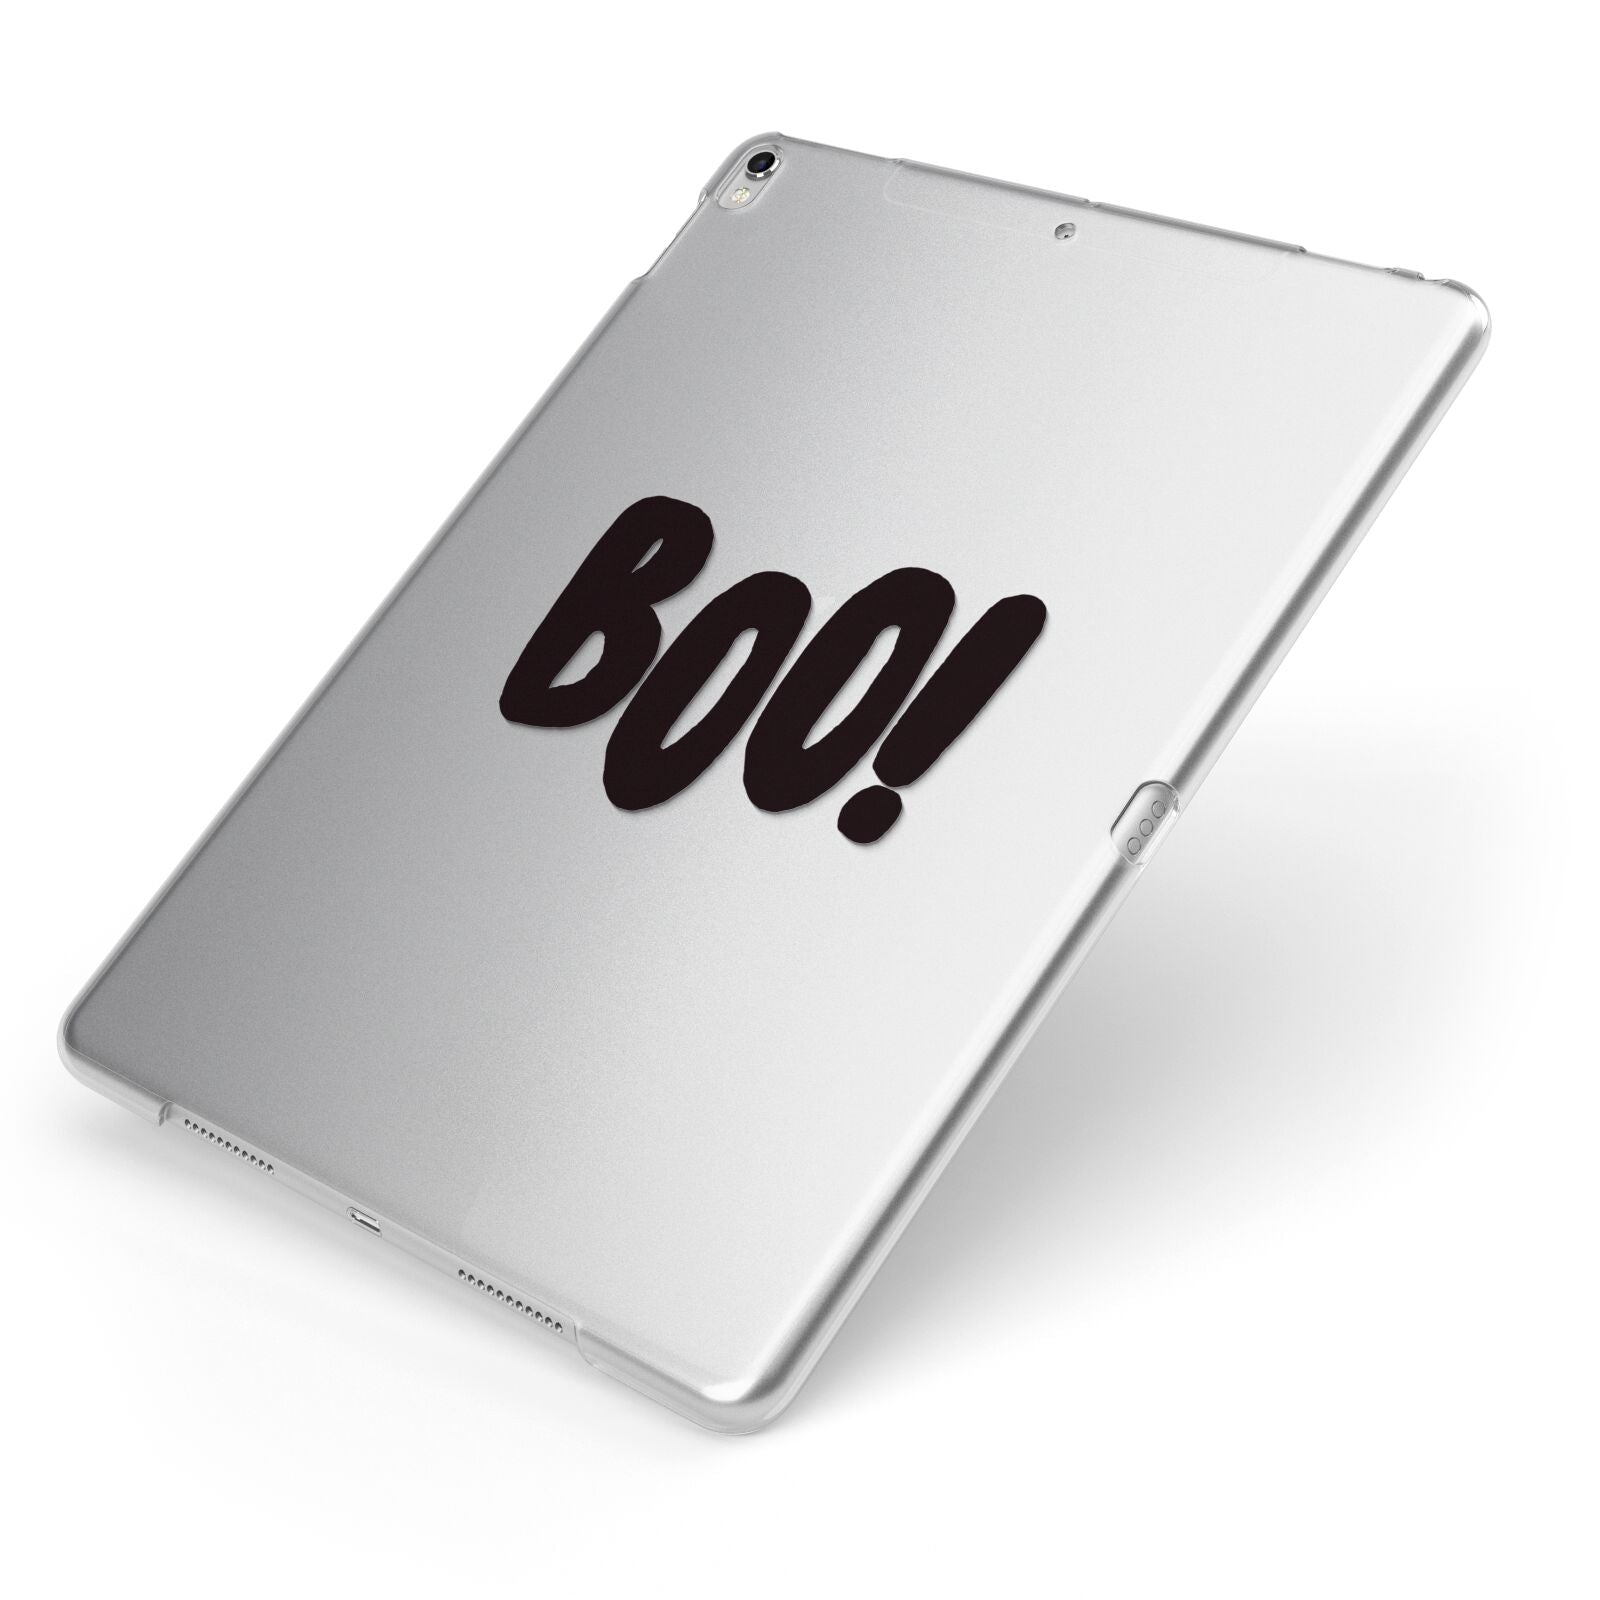 Boo Black Apple iPad Case on Silver iPad Side View